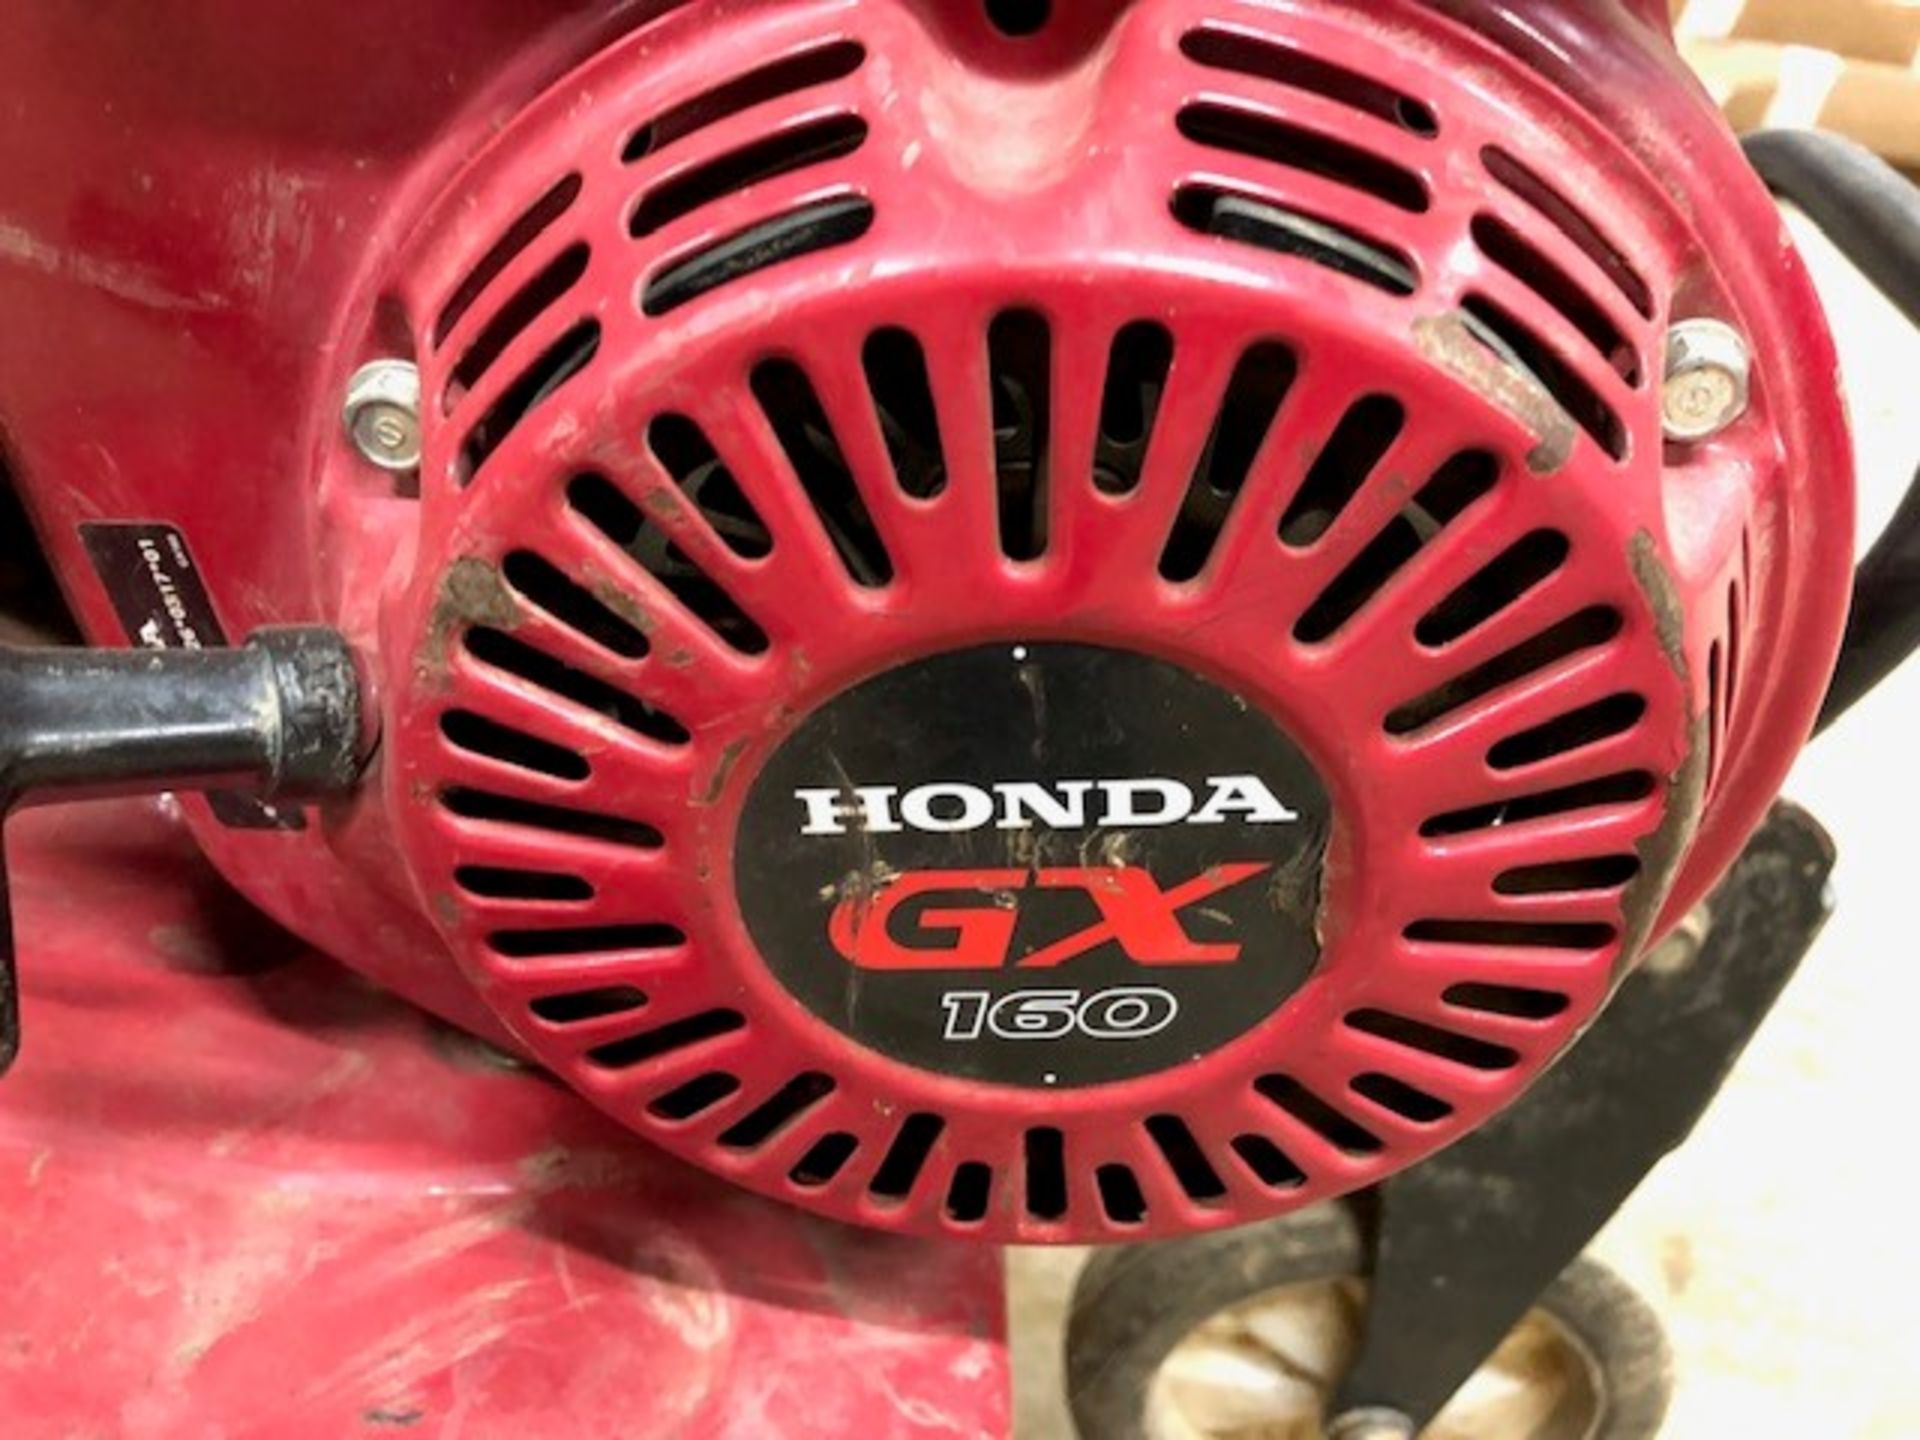 Honda DLX500 Rotovator Compact Tiller - Image 6 of 7